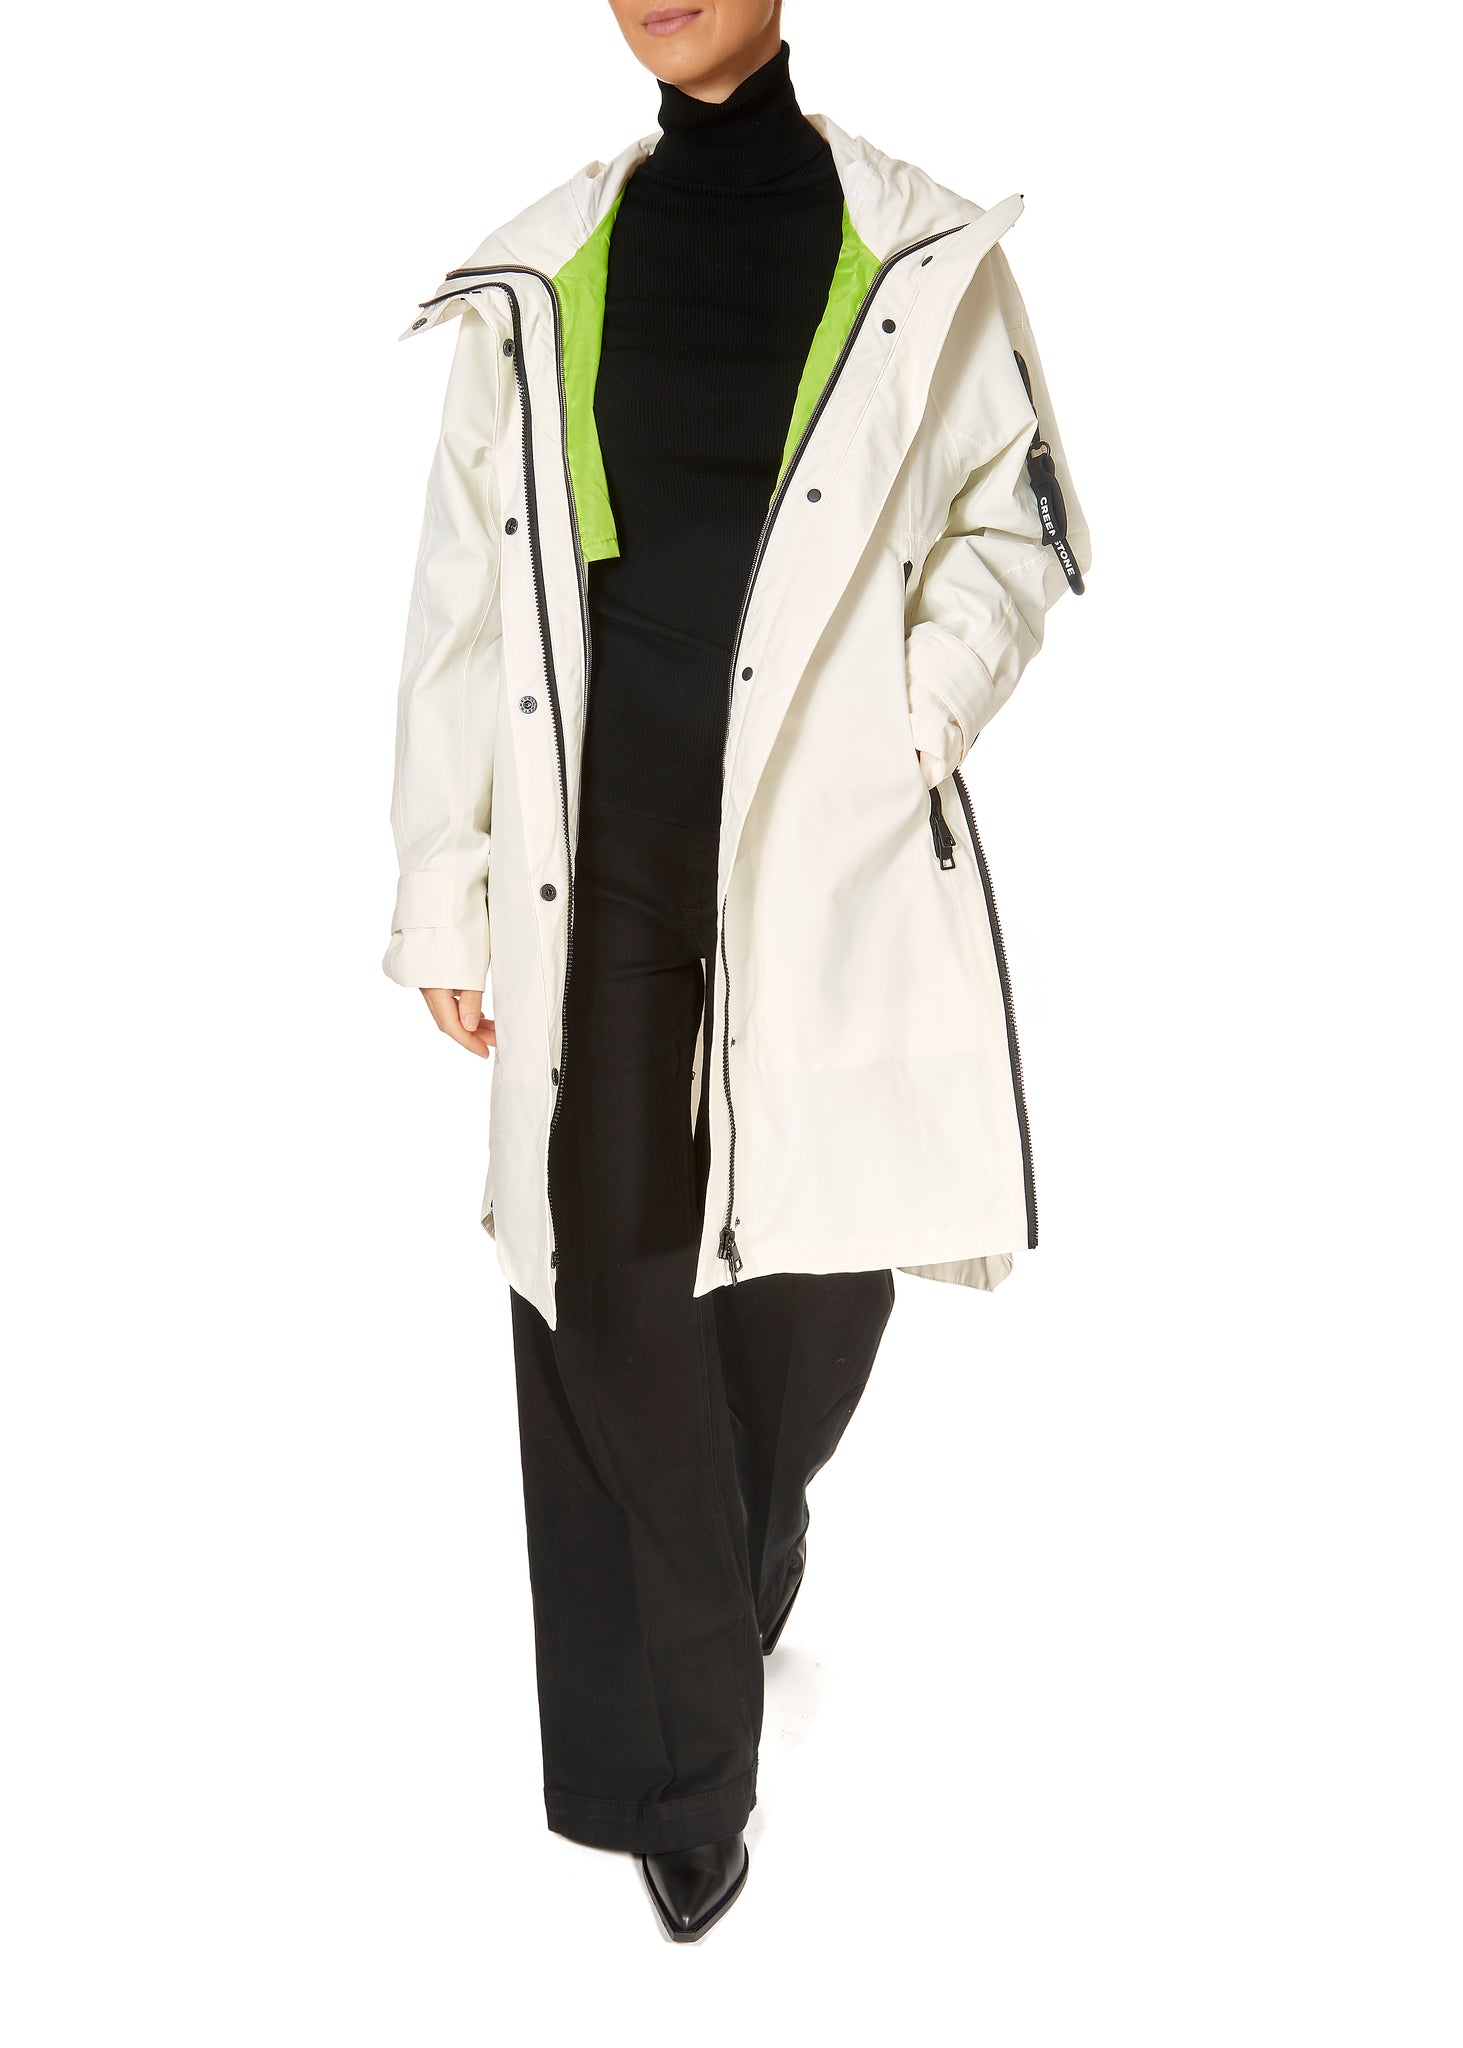 Creenstone Raincoat with Detachable Inside Jacket White